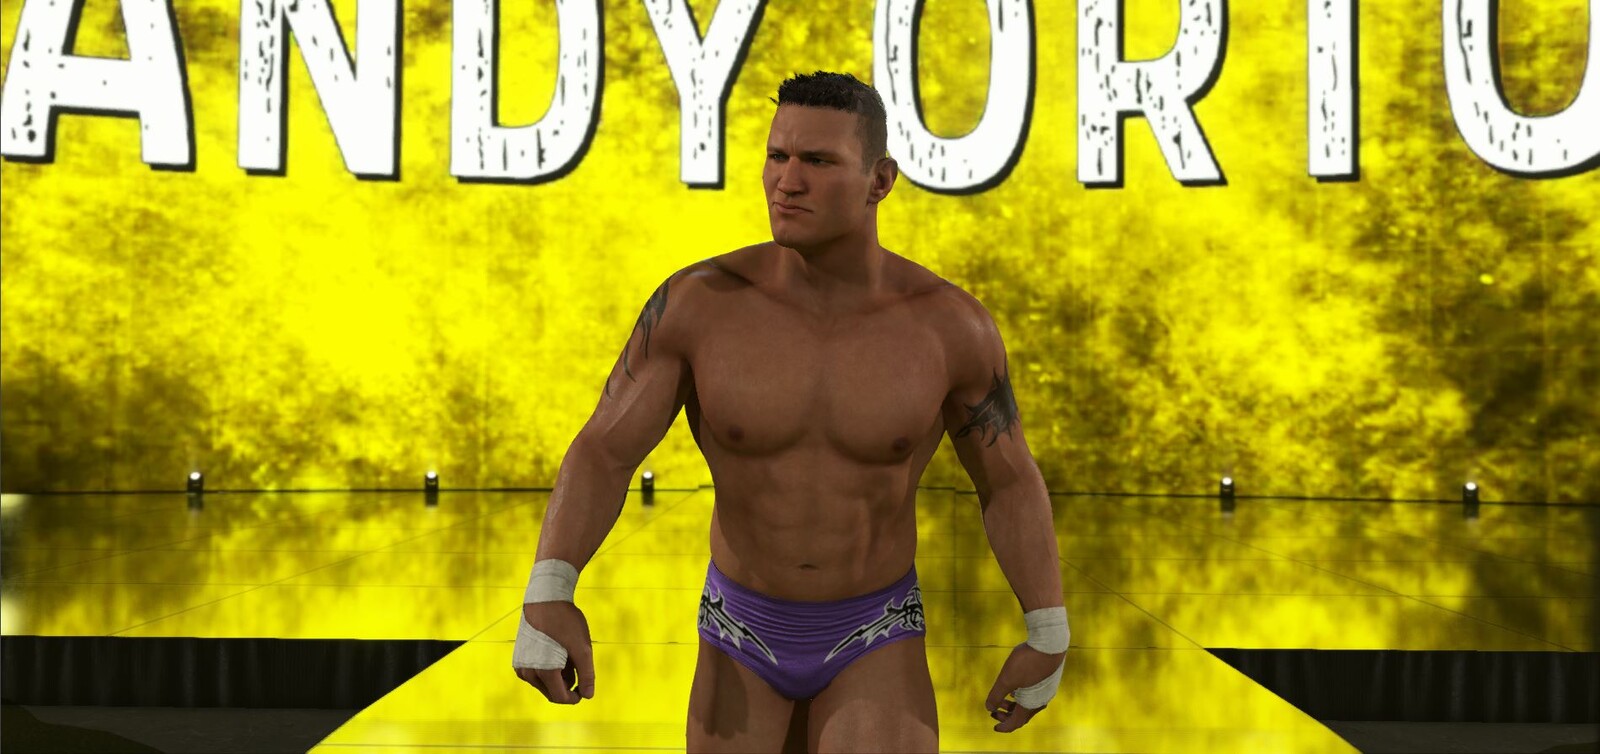 Randy Orton
based on his Armageddon 2003 attire